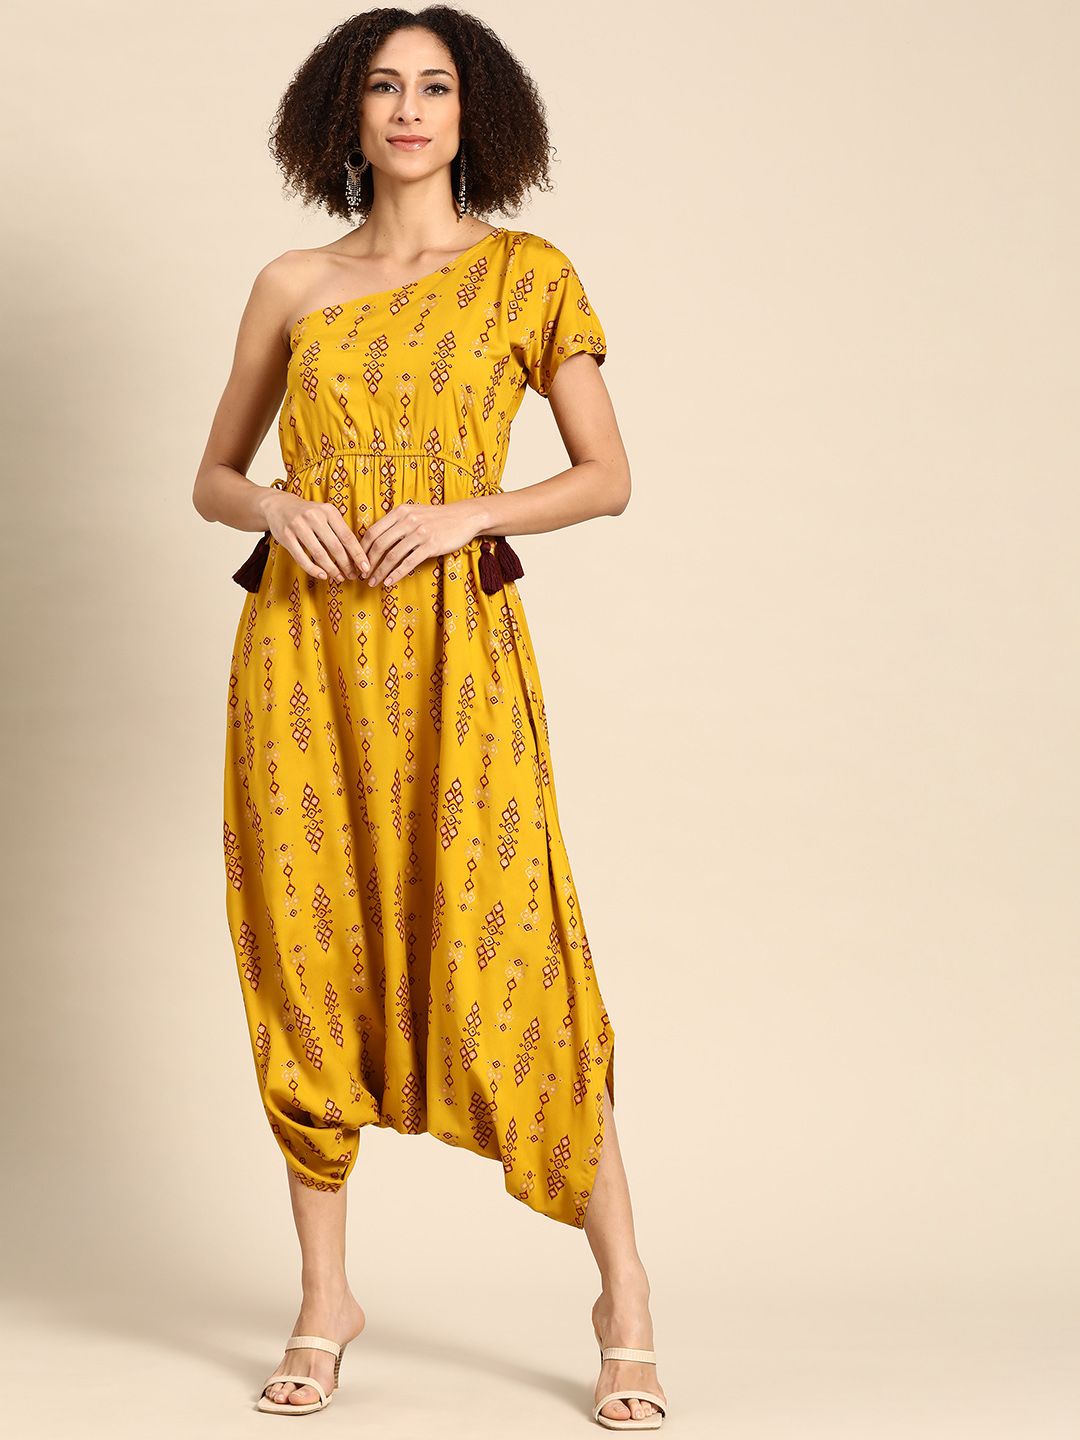 MABISH by Sonal Jain Mustard Yellow & Golden One-Shoulder Printed Dhoti Jumpsuit Price in India